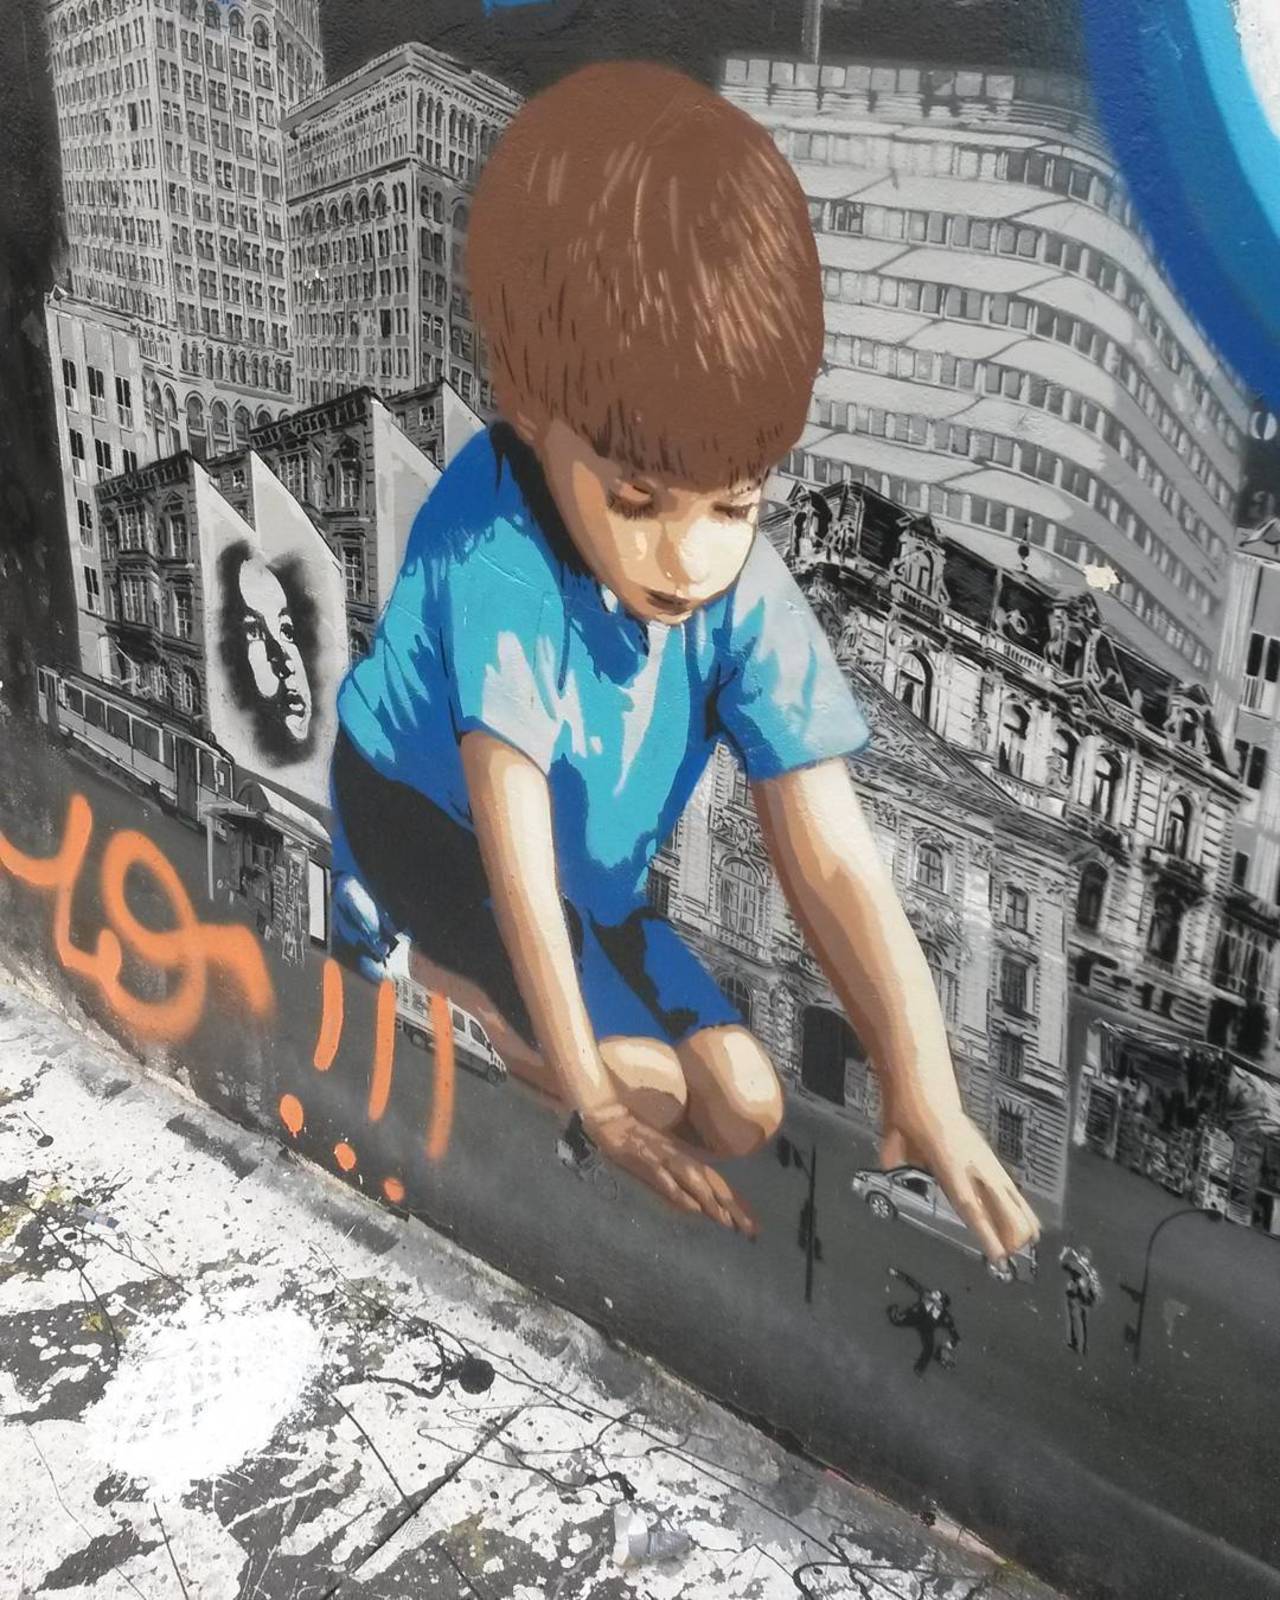 #Paris #graffiti photo by @le_cyclopede http://ift.tt/1MP5PIr #StreetArt http://t.co/yewiVVEcjJ